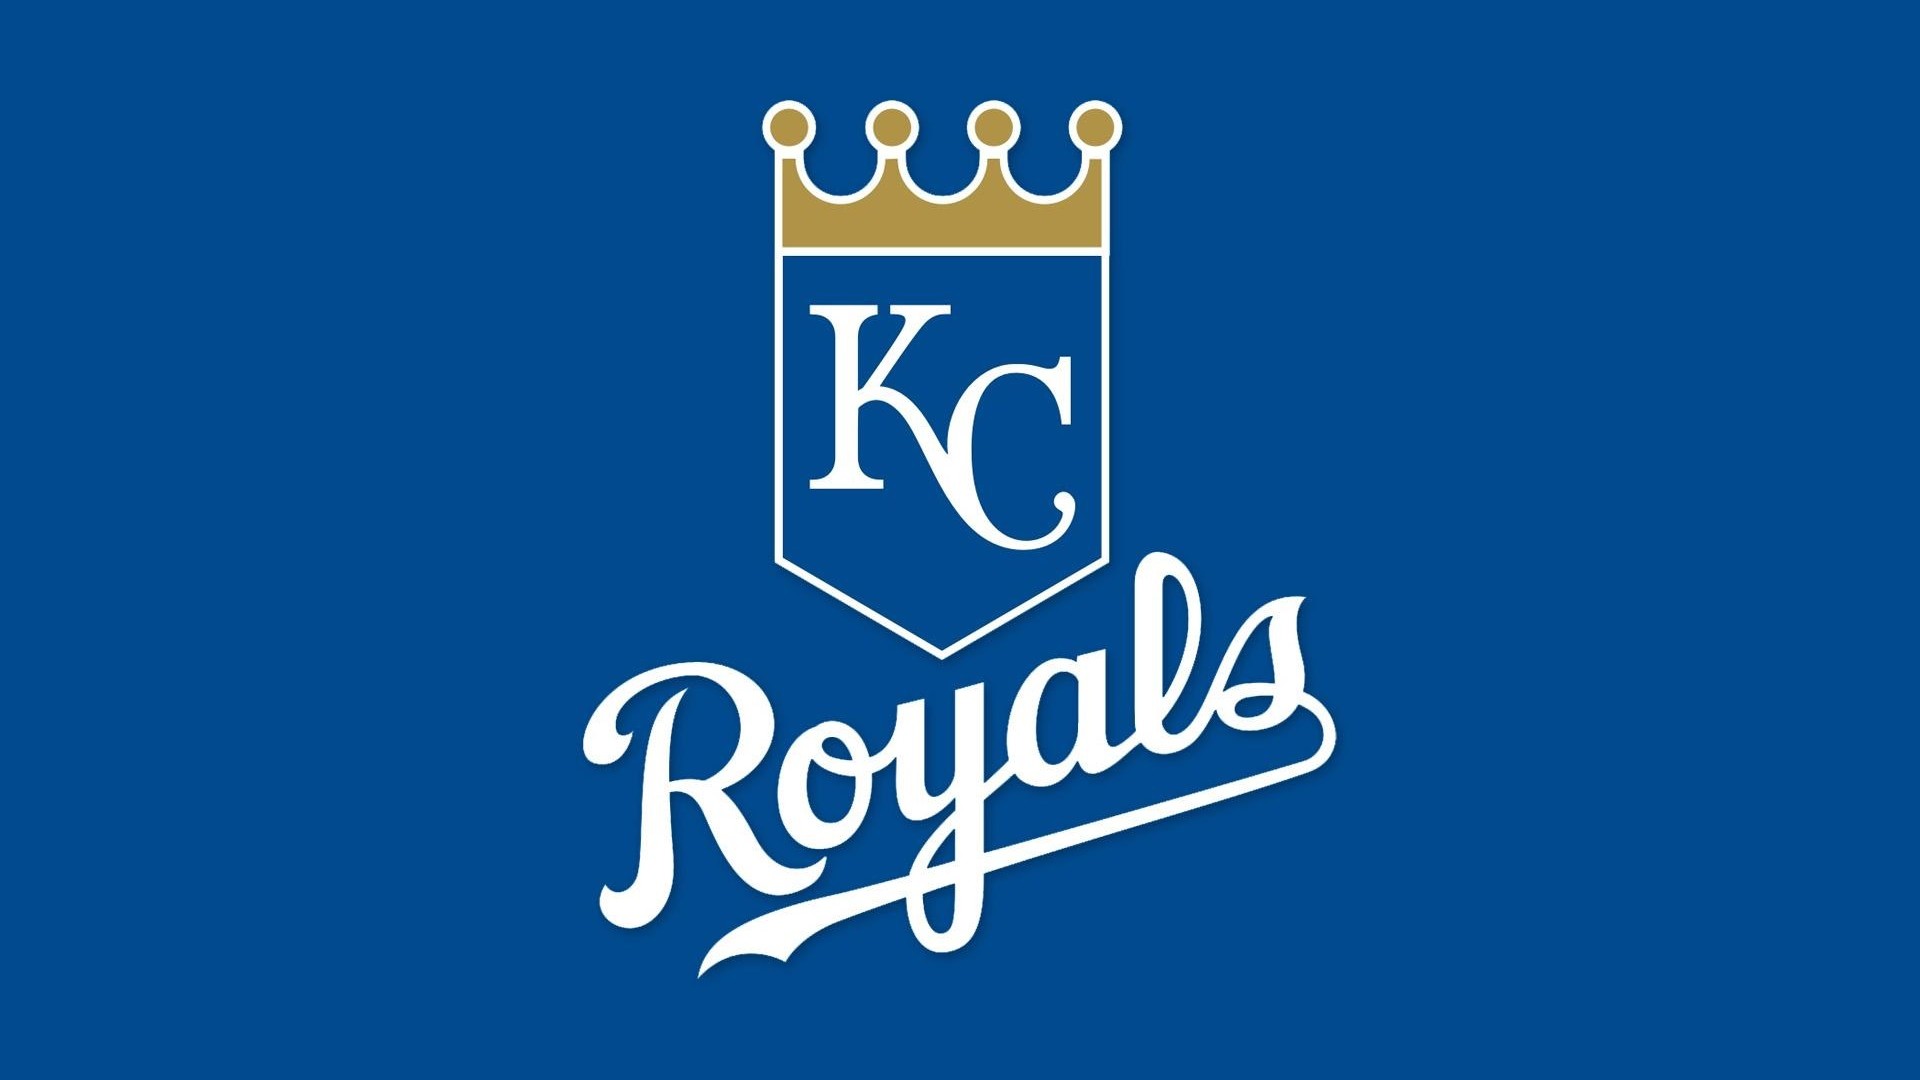 1920x1080 ... Kansas City Royals Baseball Club Wallpaper